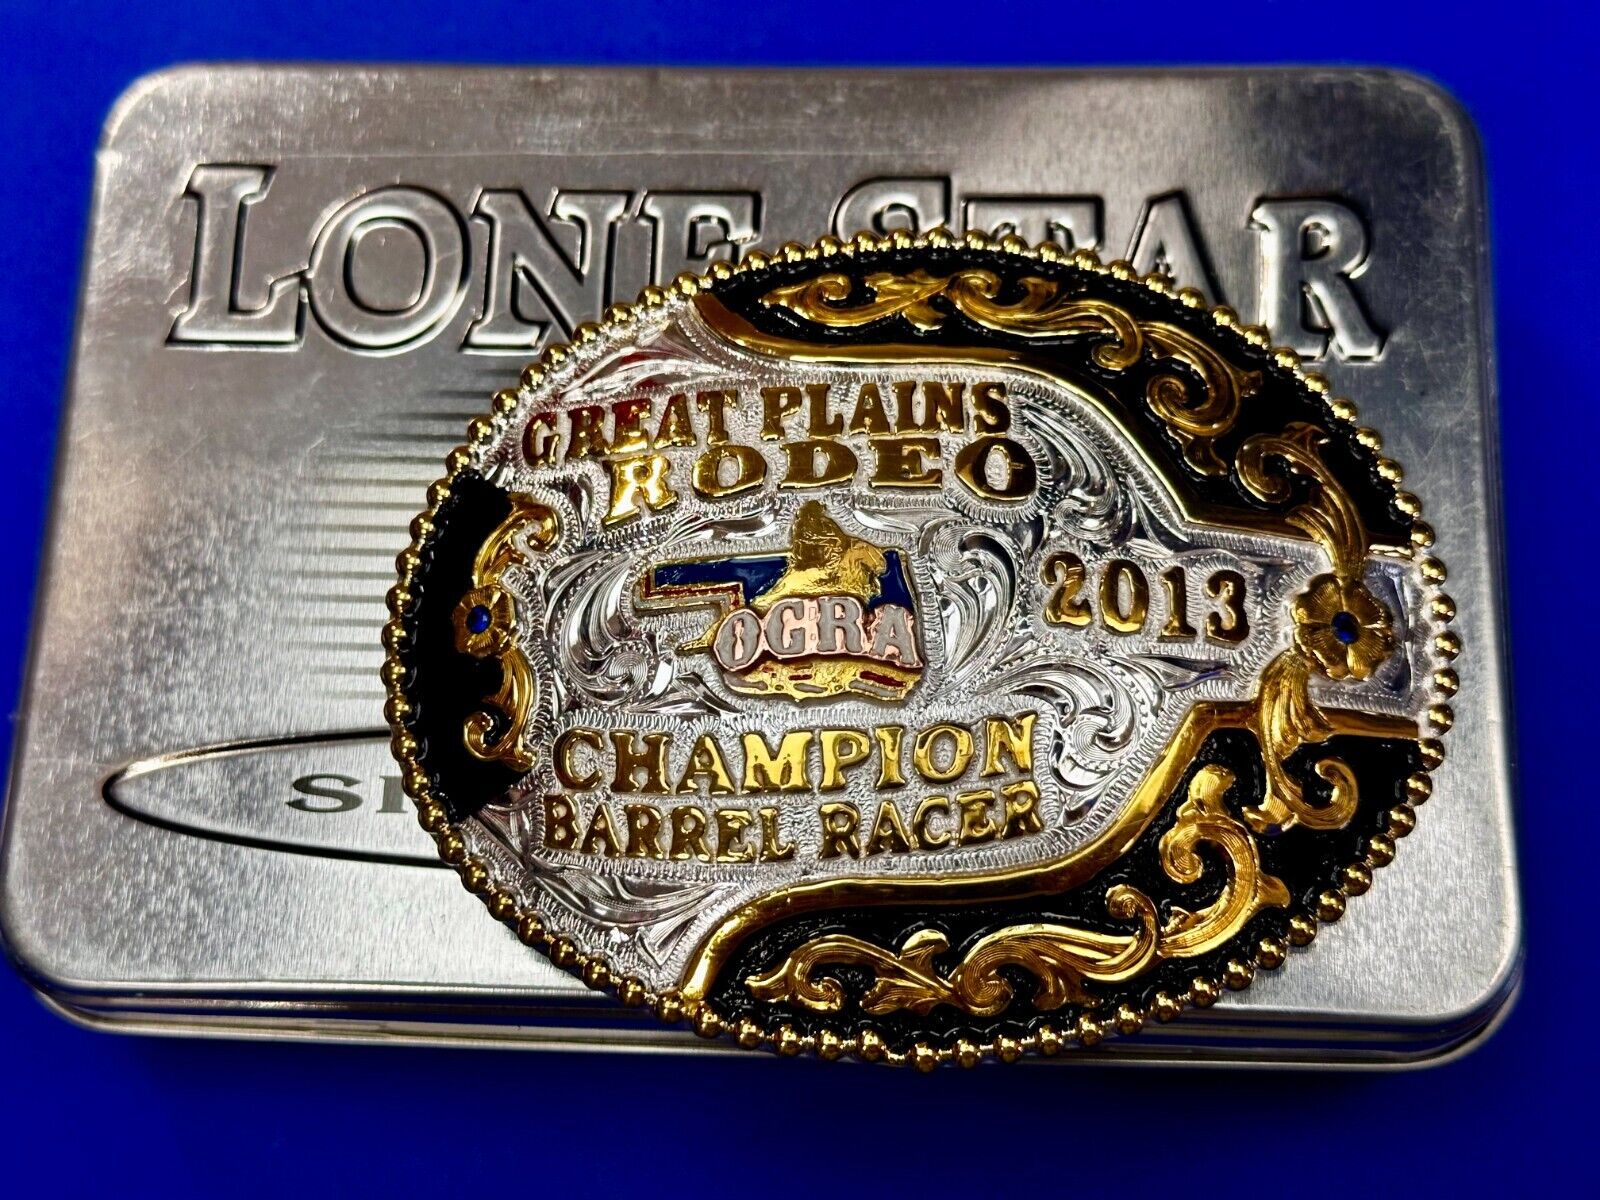 Great Plains Rodeo Champion Barrel Racer Trophy Lone Star Belt Buckle